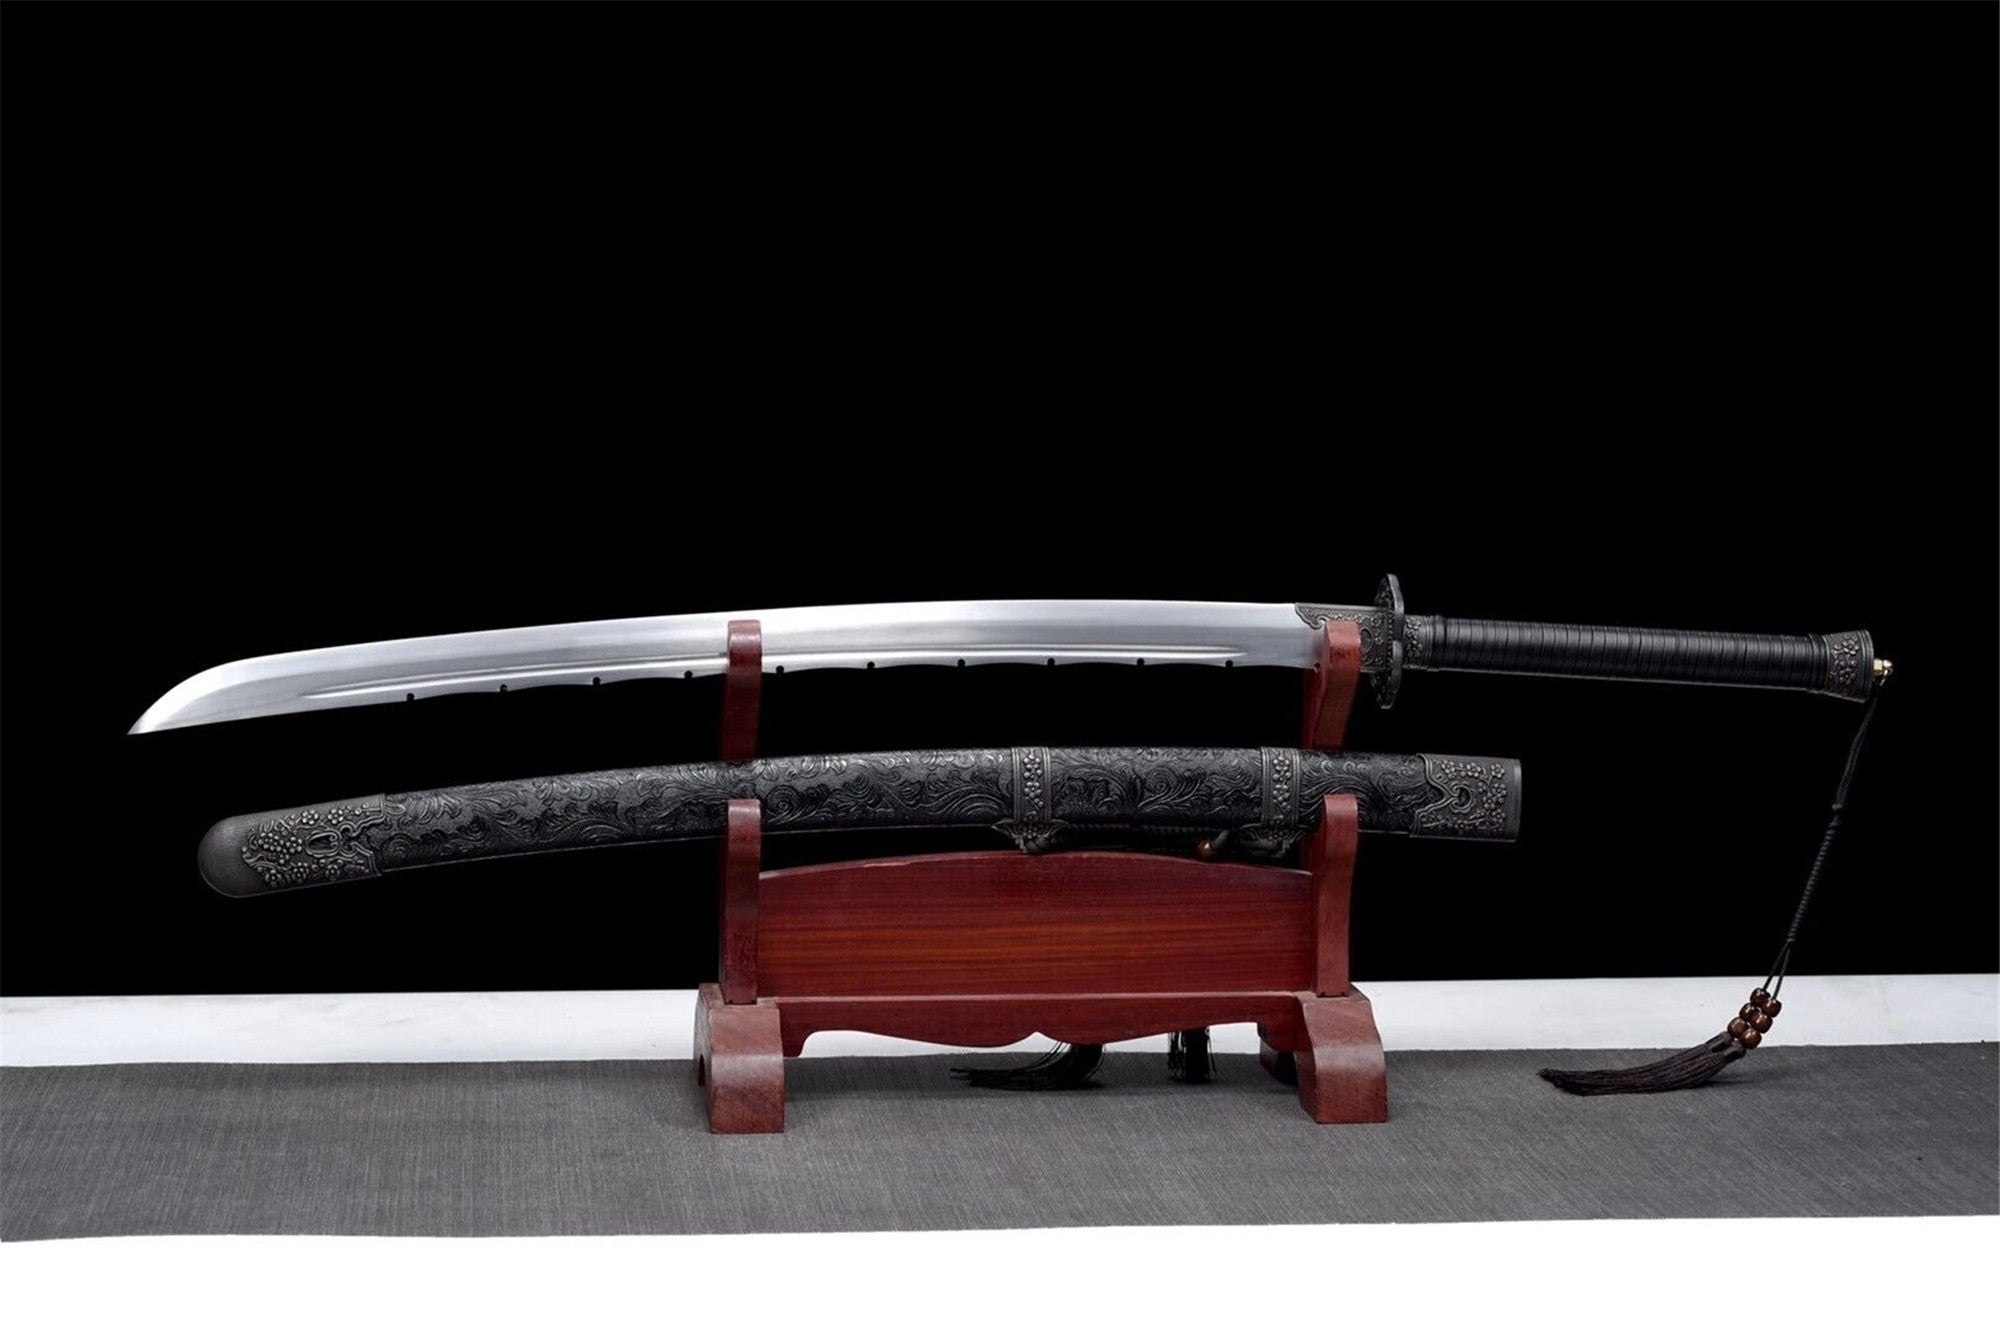 Brotherhood of Blades,Handicraft,Purgatory,Real Sword,Handmade Chinese Sword,High manganese steel,Longquan sword